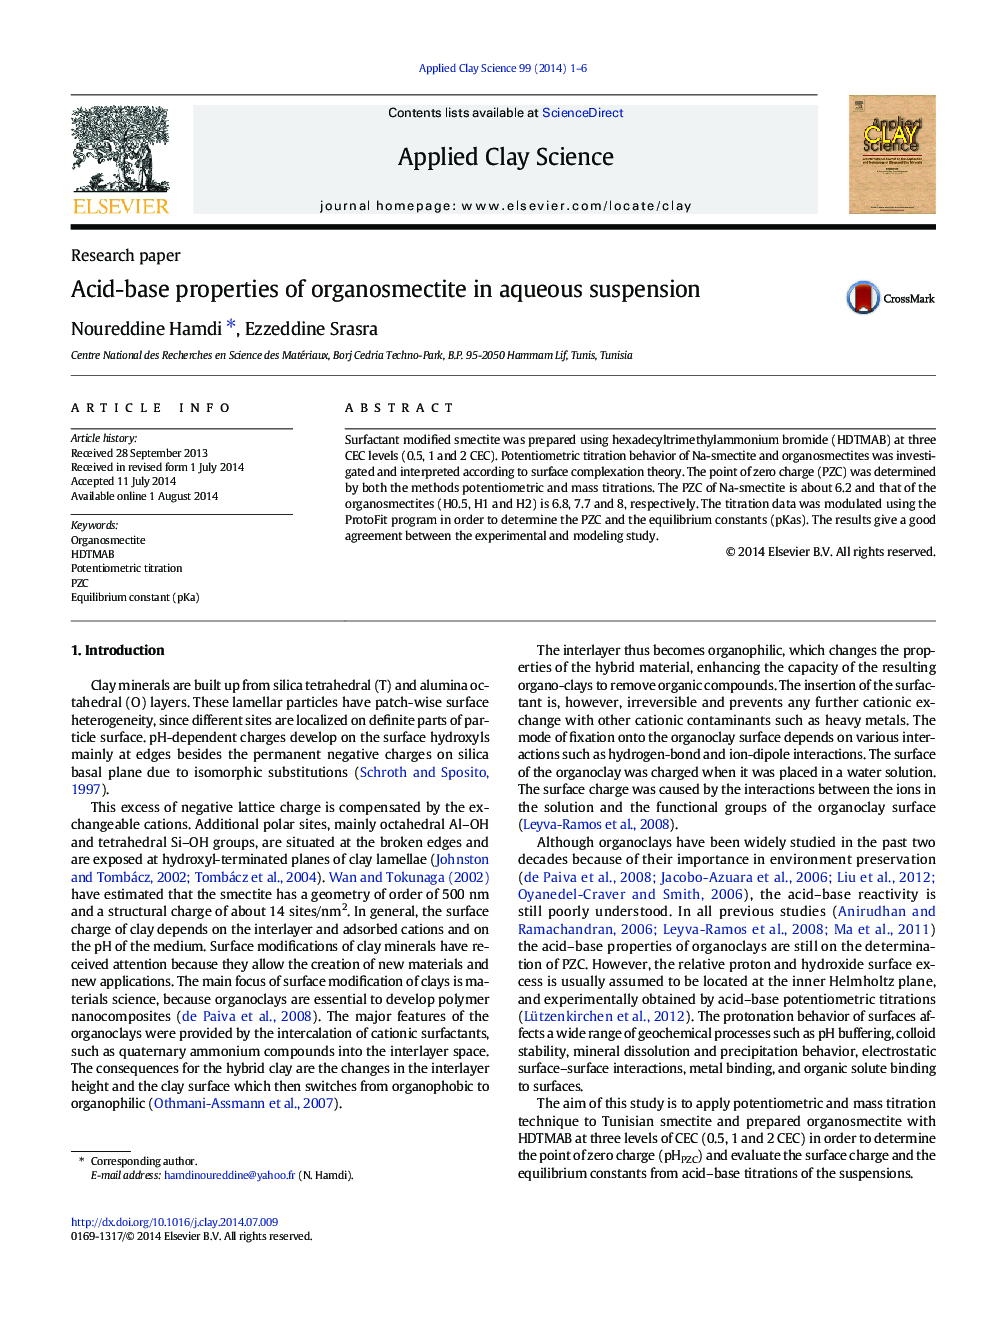 Acid-base properties of organosmectite in aqueous suspension